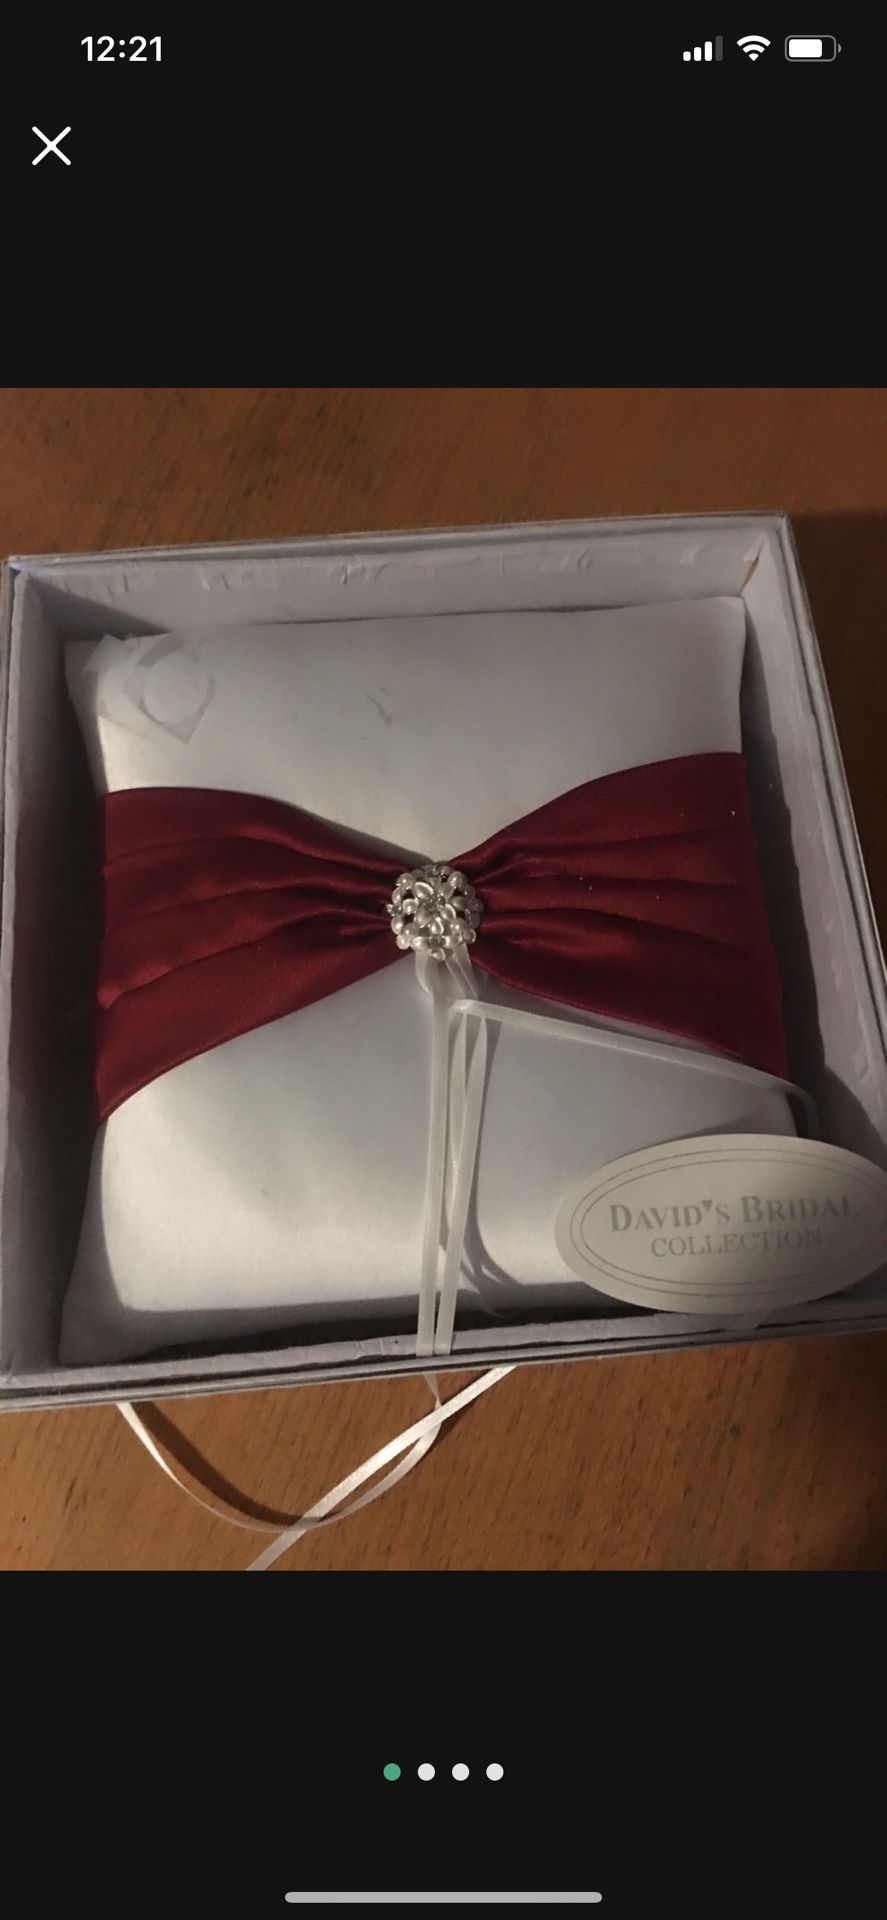 David’s Bridal wedding 💒 collection brand new paid 29.99 plus tax